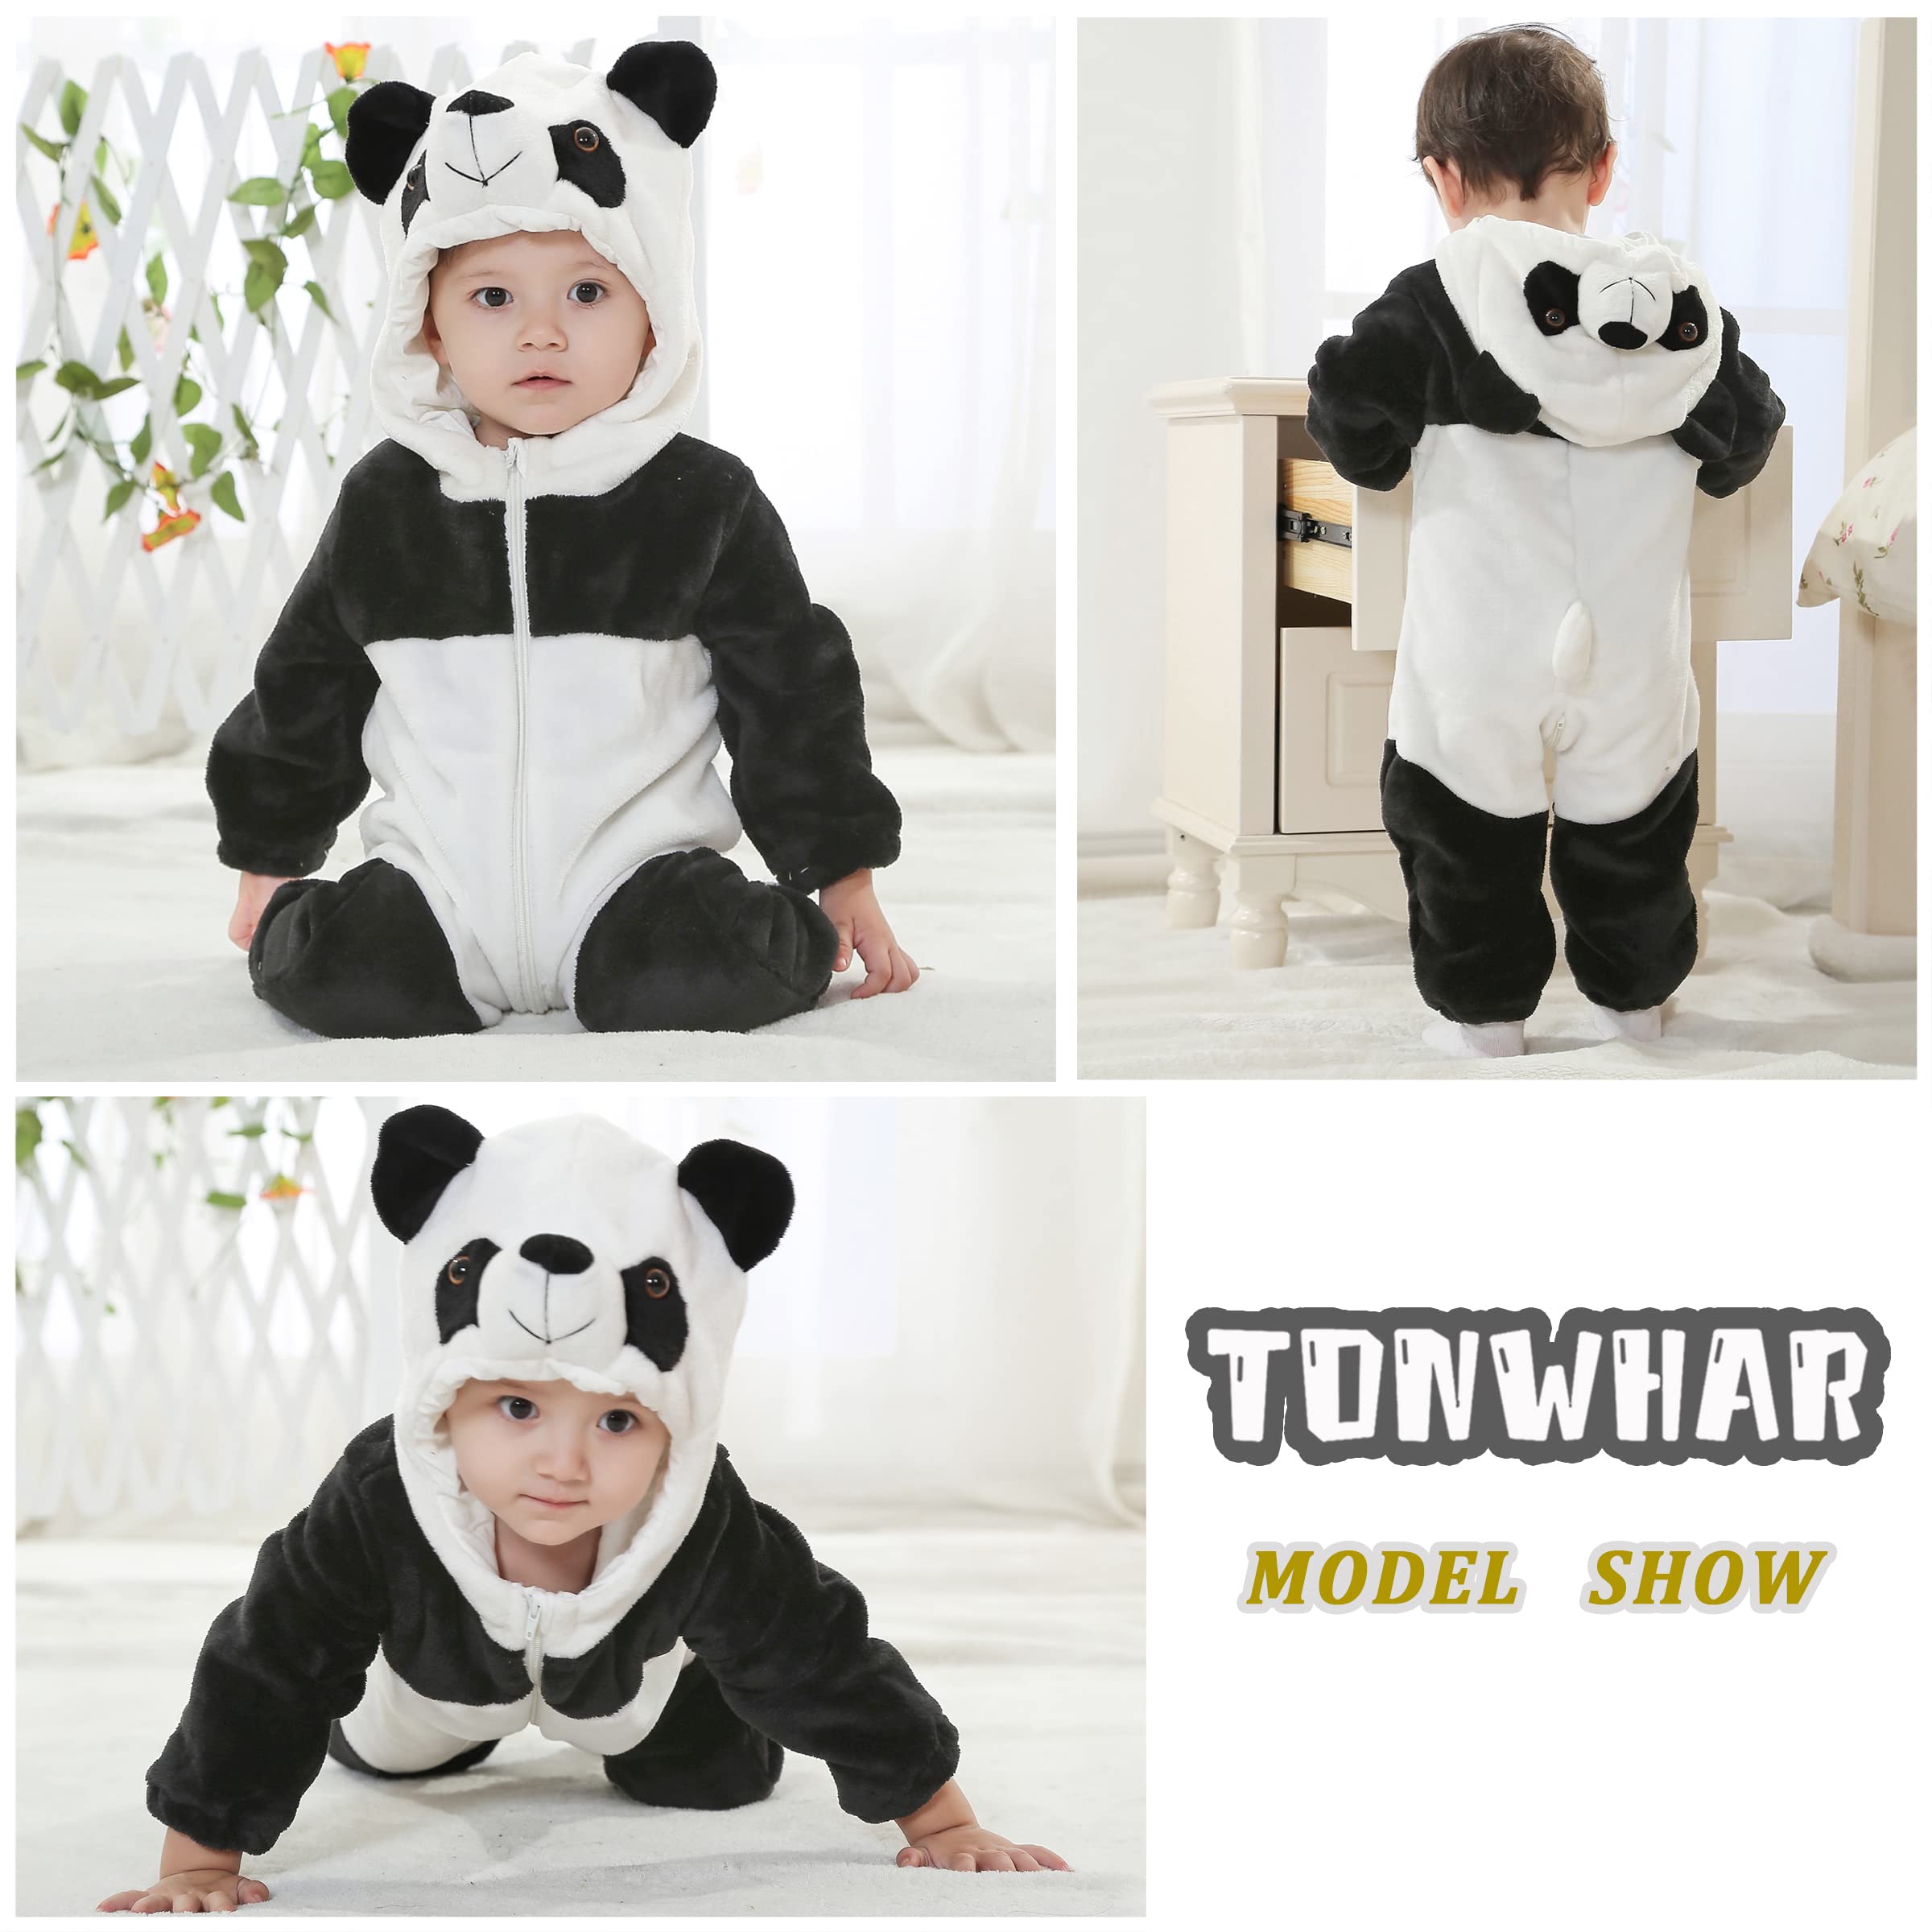 TONWHAR Unisex-Baby Animal Onesie Costume Cartoon Animal Outfit Homewear Kids' One-Piece Rompers